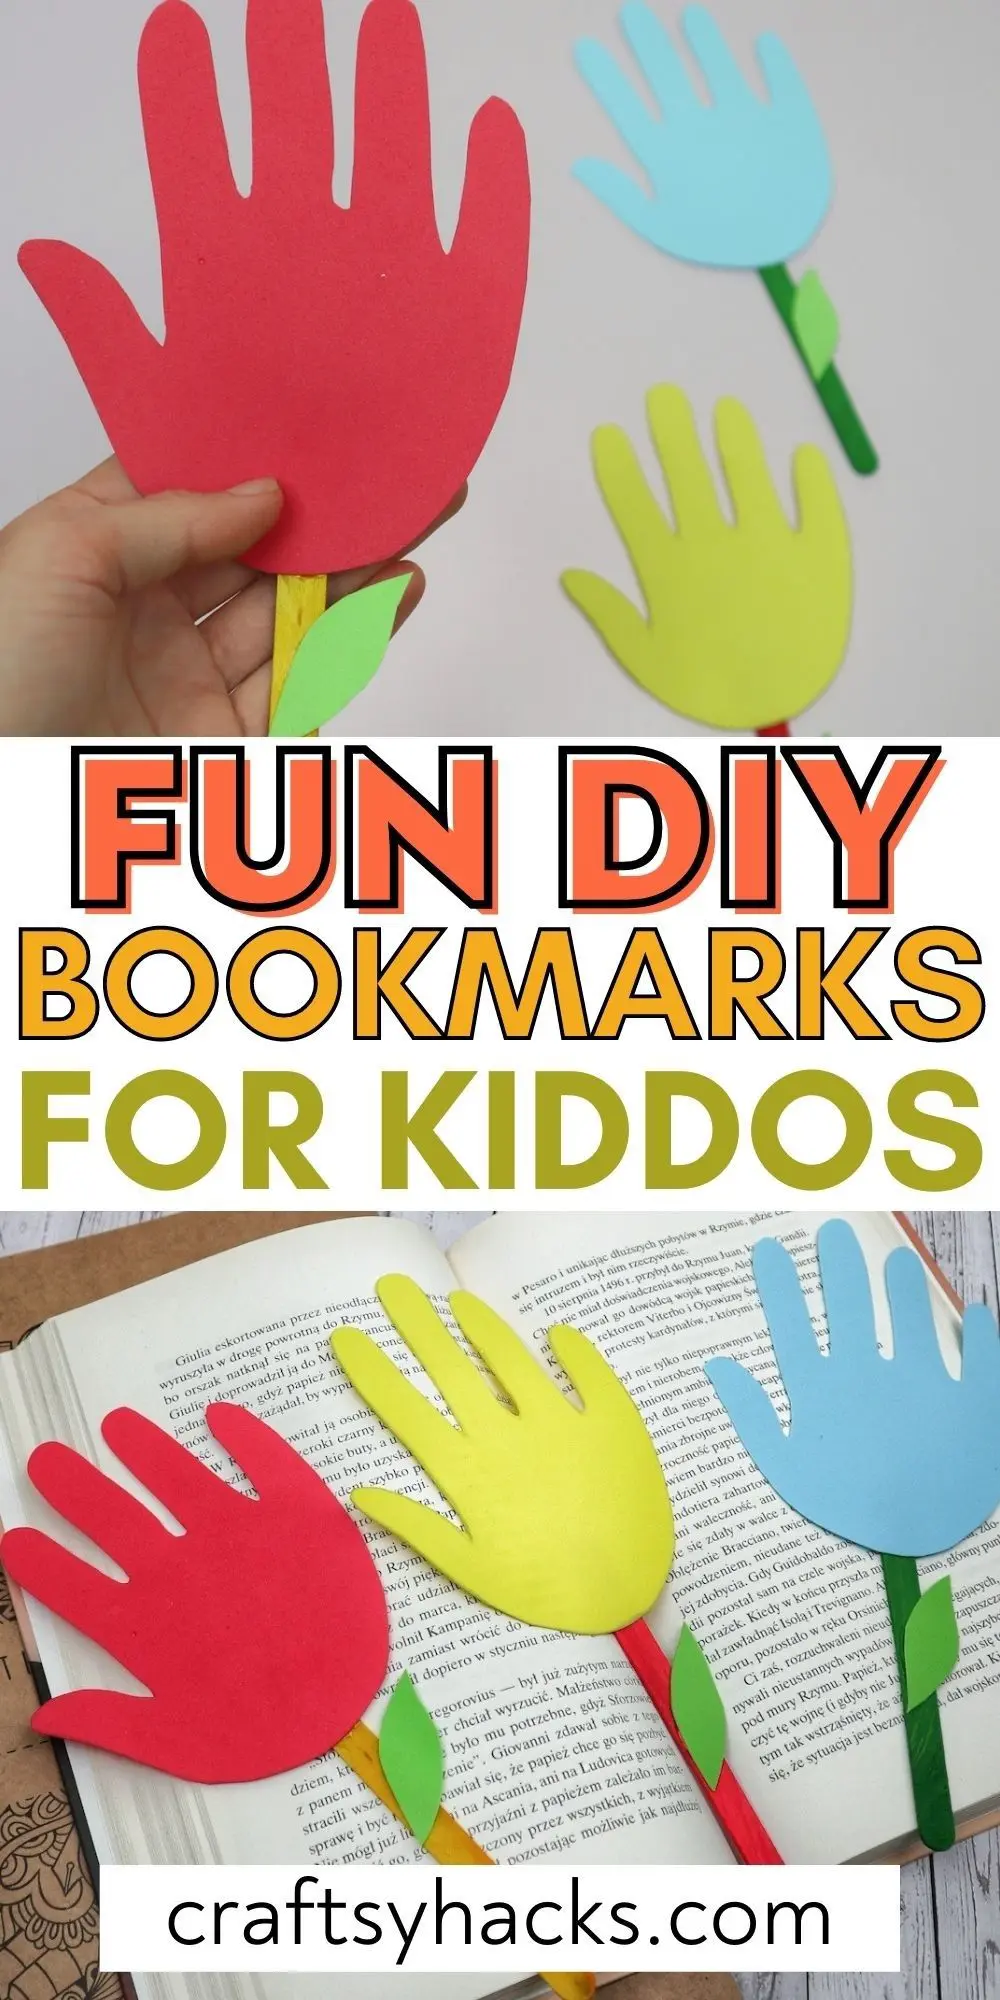 fun diy bookmarks for kiddos pin